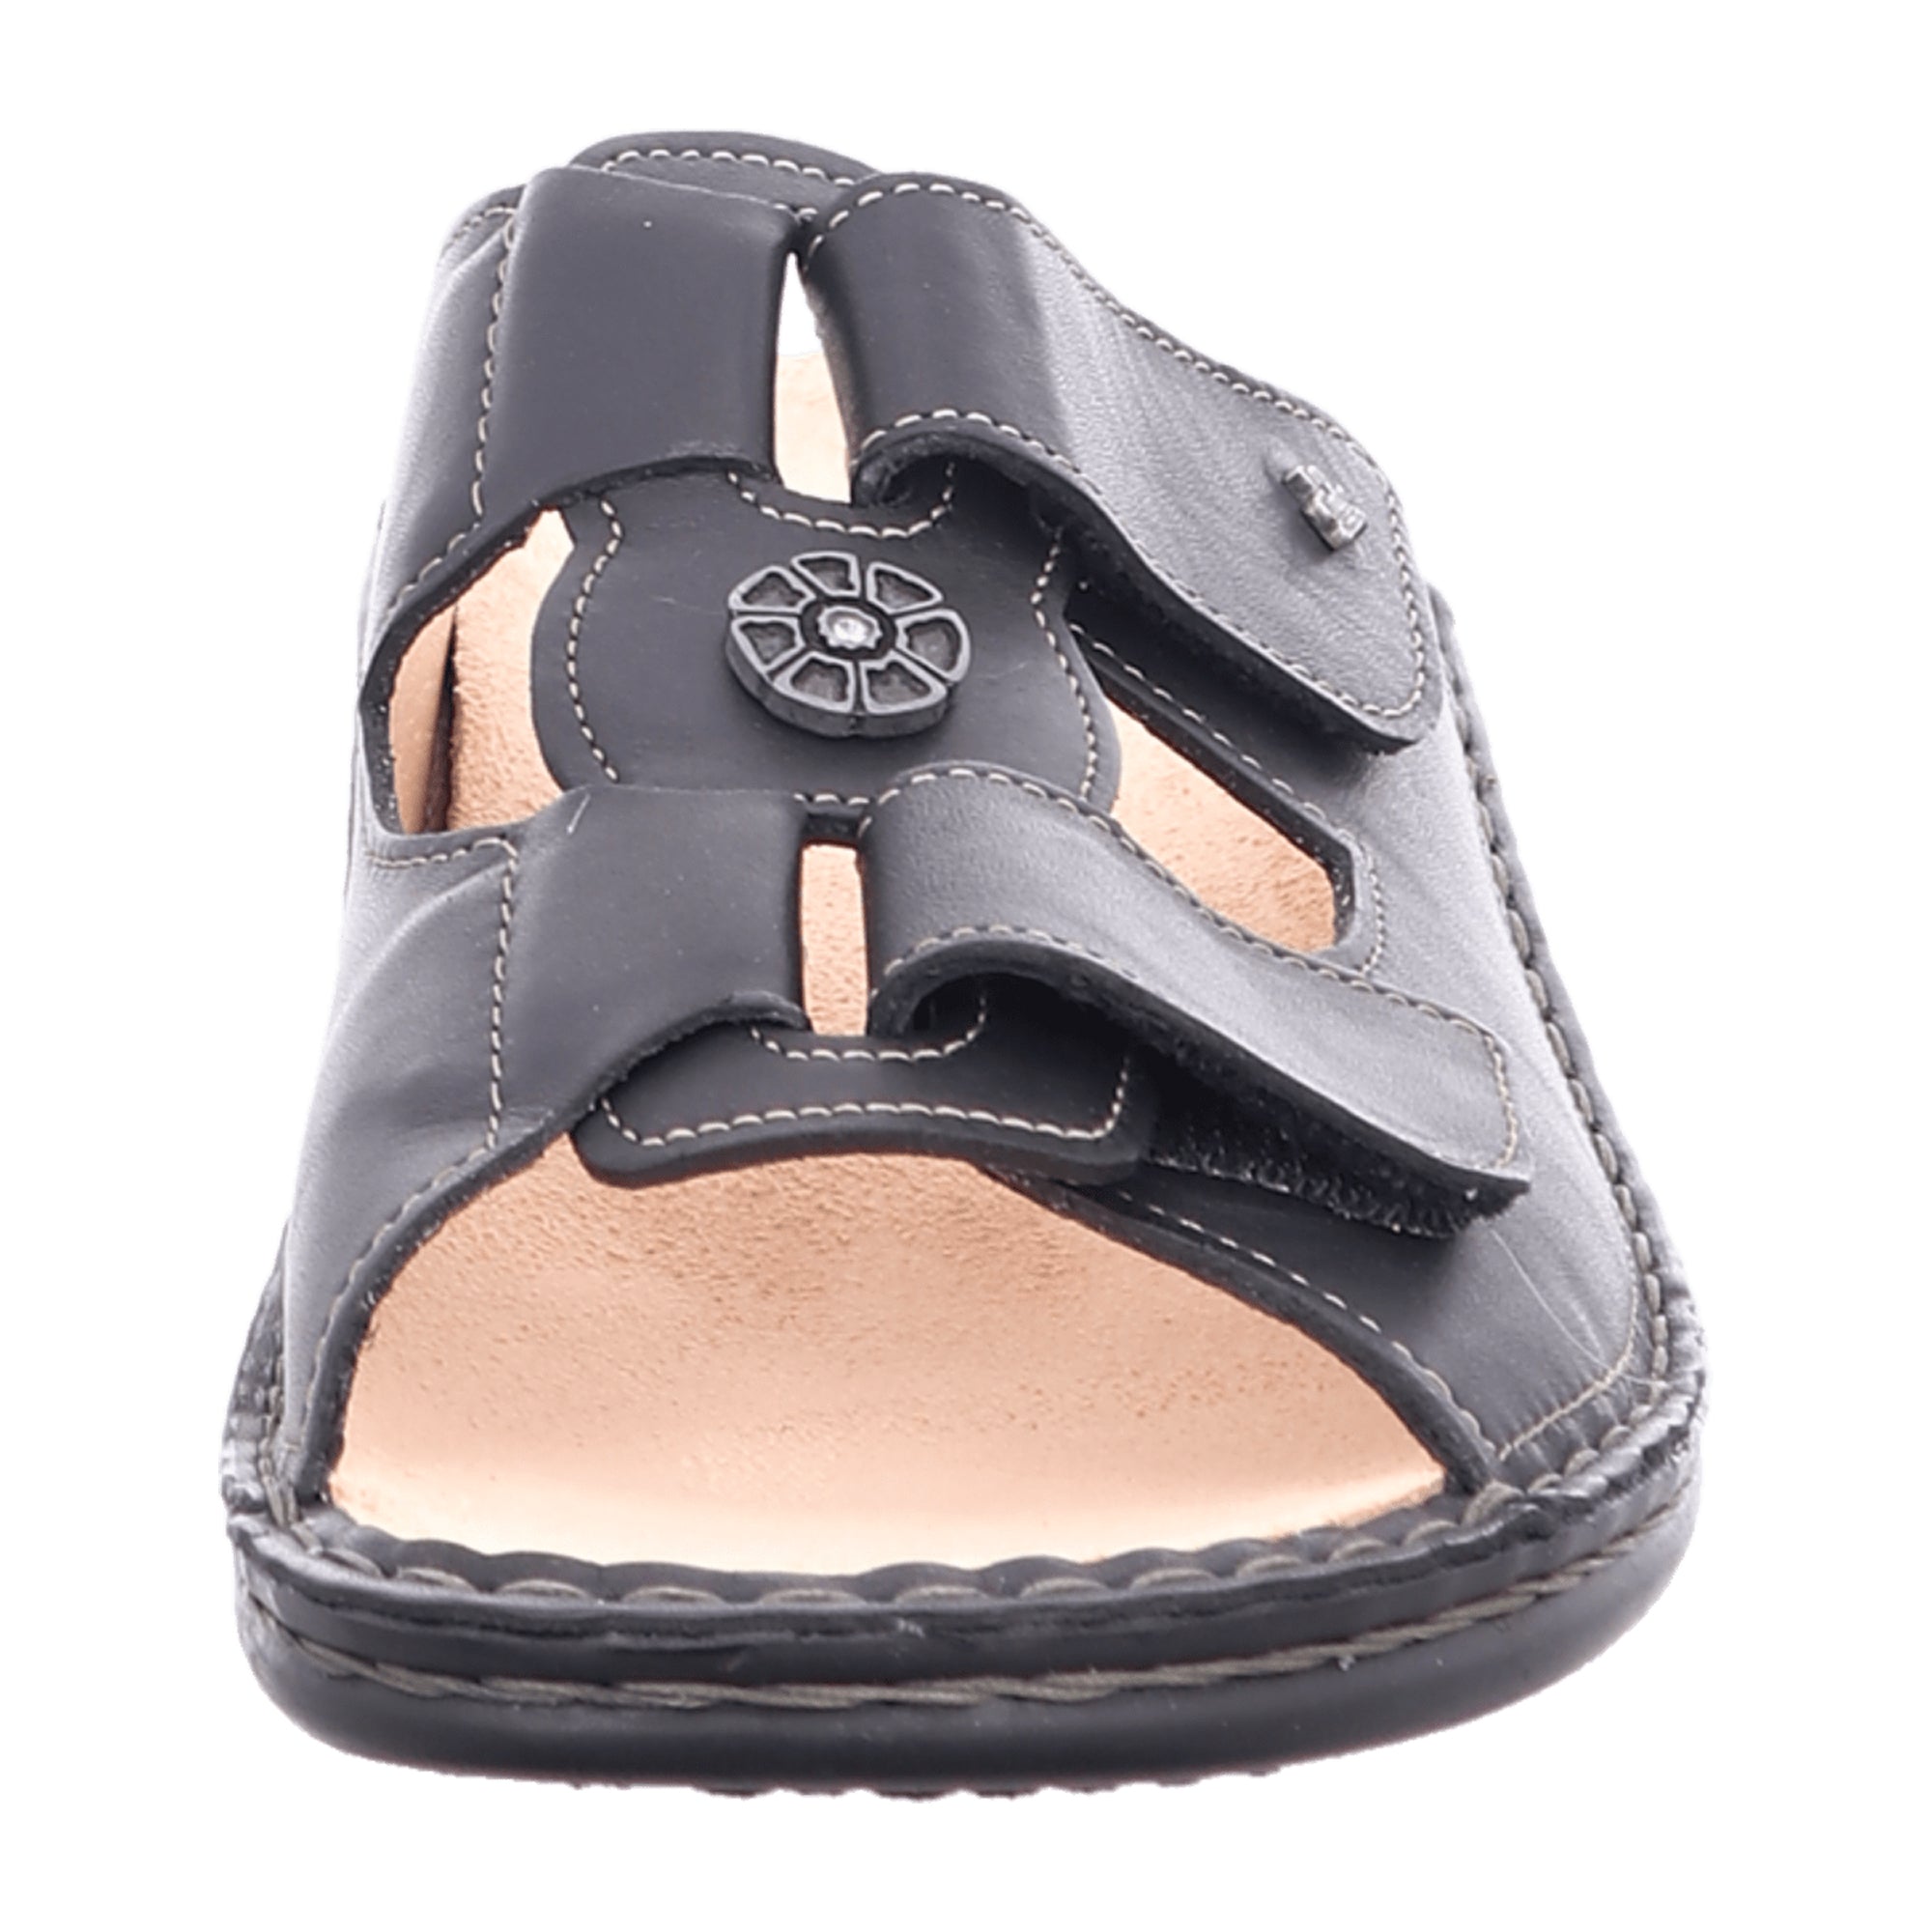 Finn Comfort Pattaya Women's Black Sandals - Stylish & Orthopedic